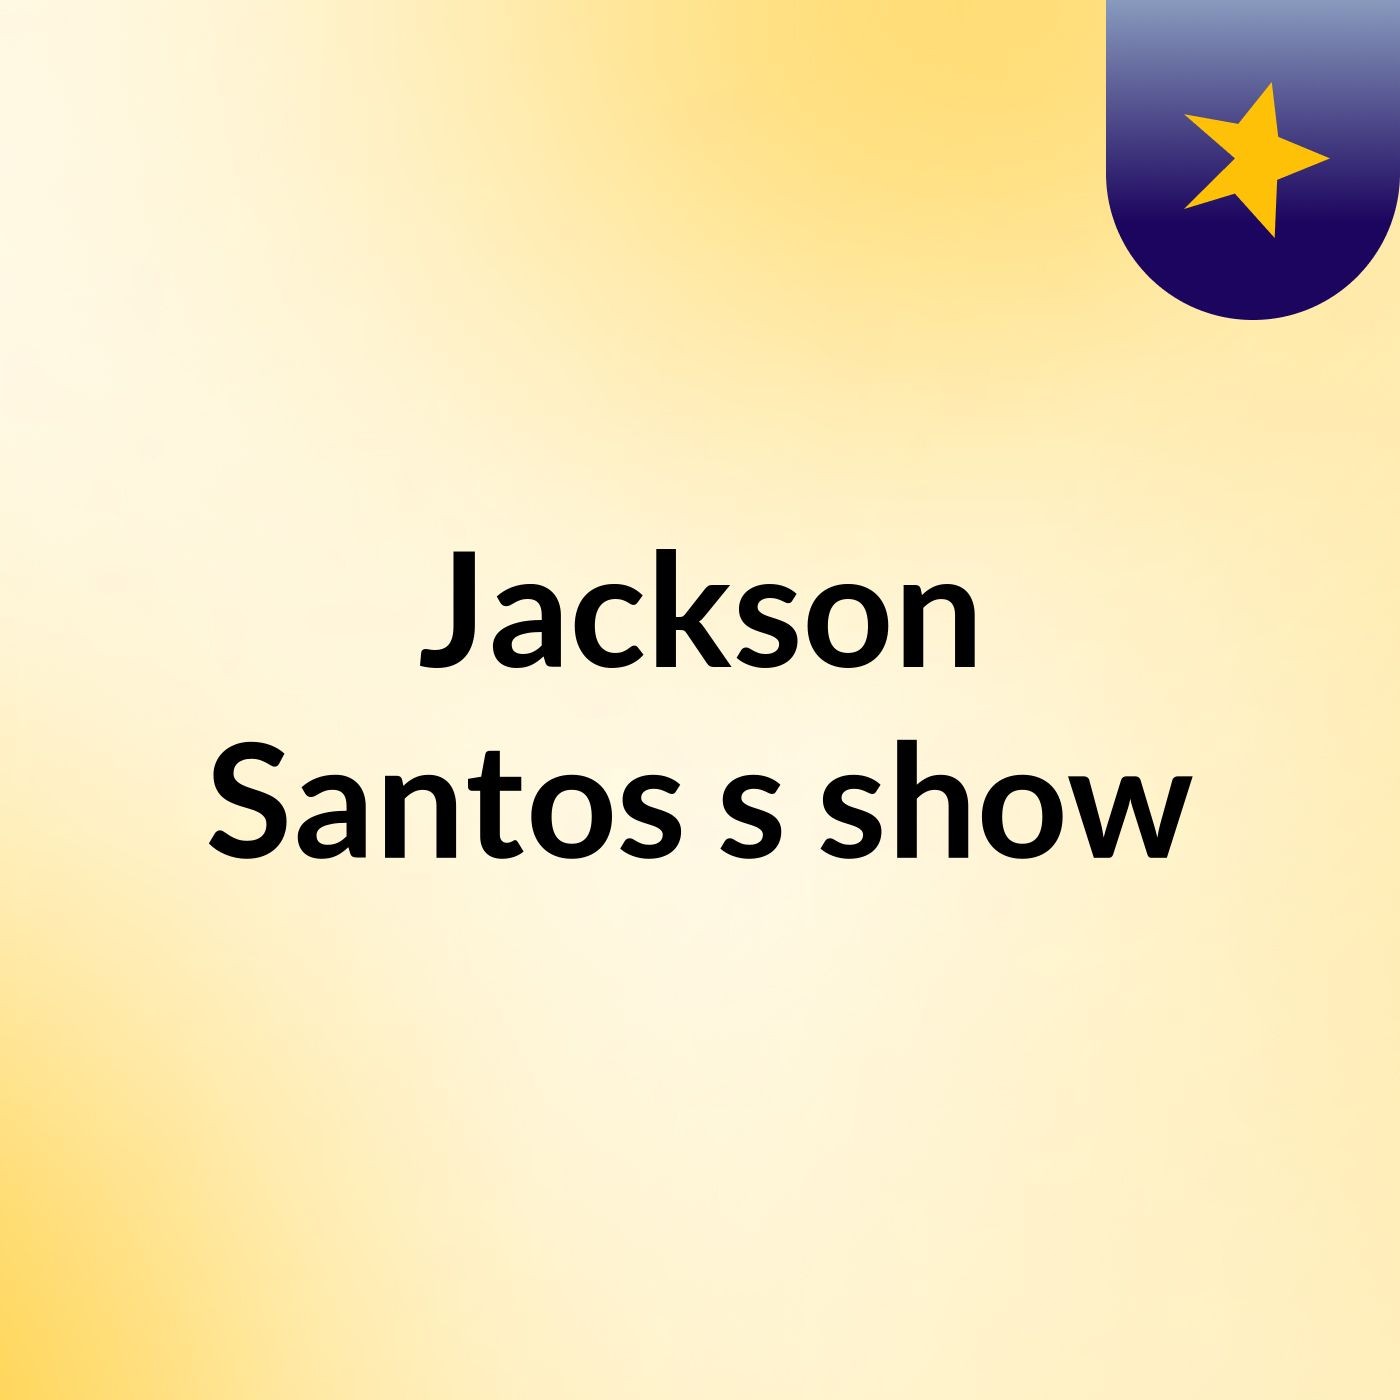 Jackson Santos's show